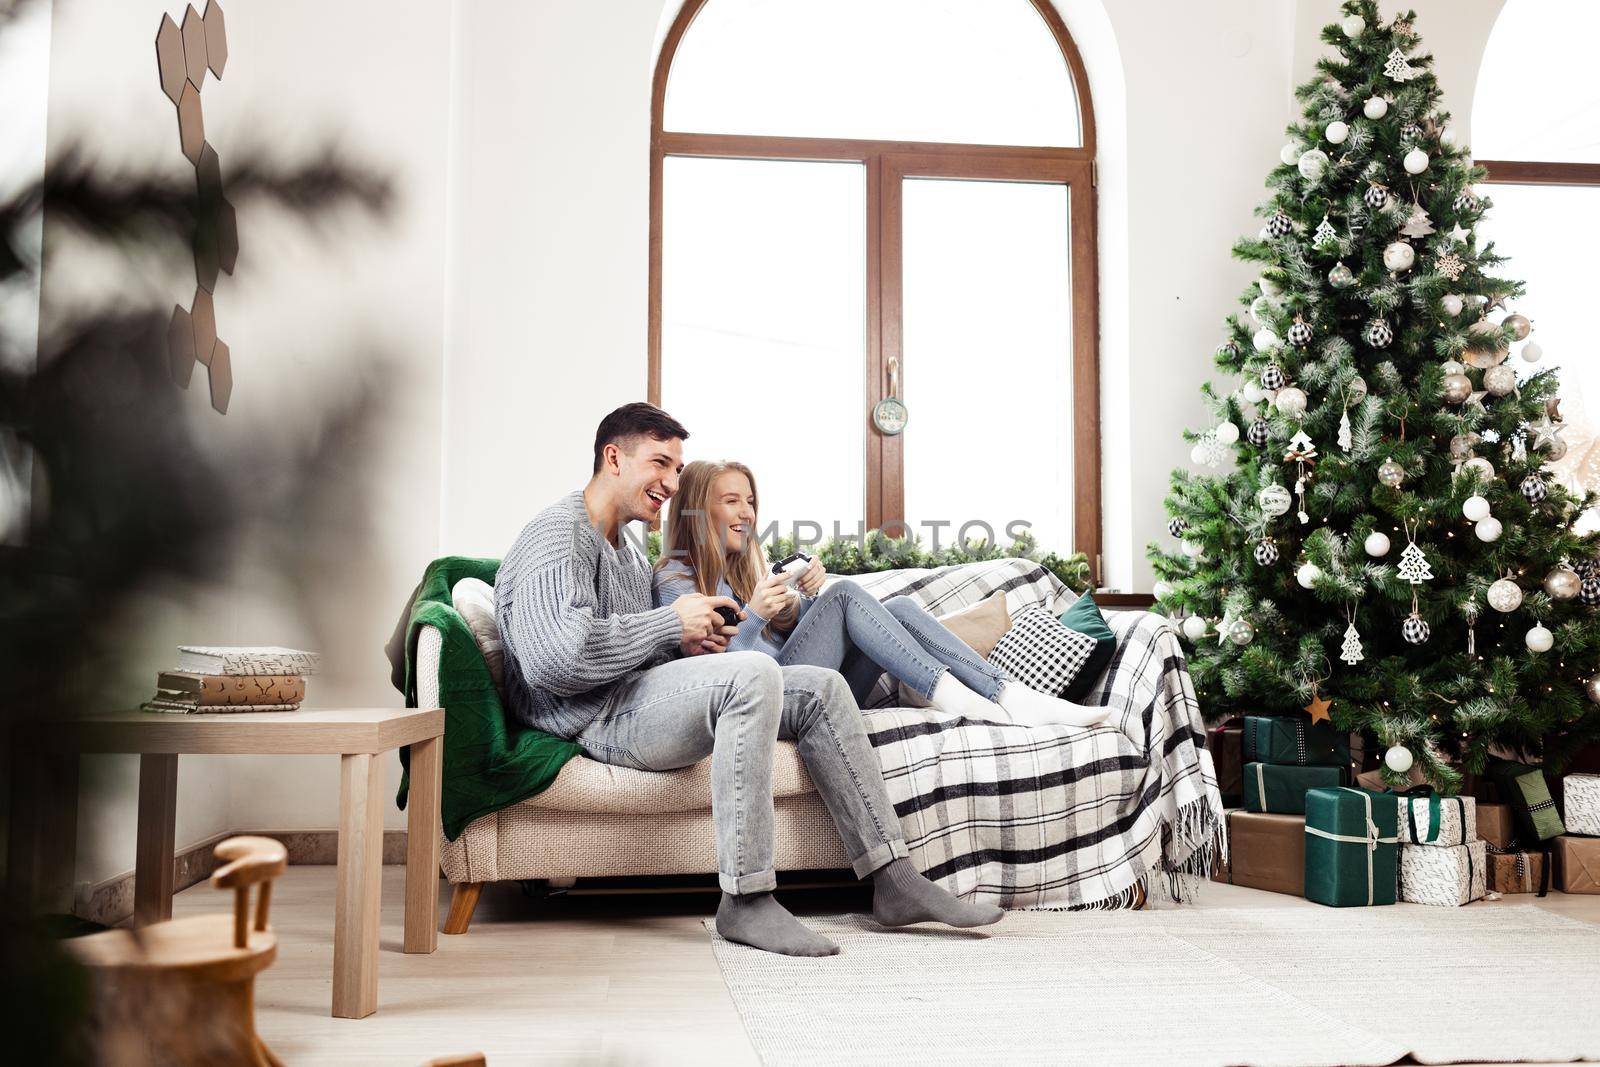 Sweet couple embracing on sofa at home during christmas holidays